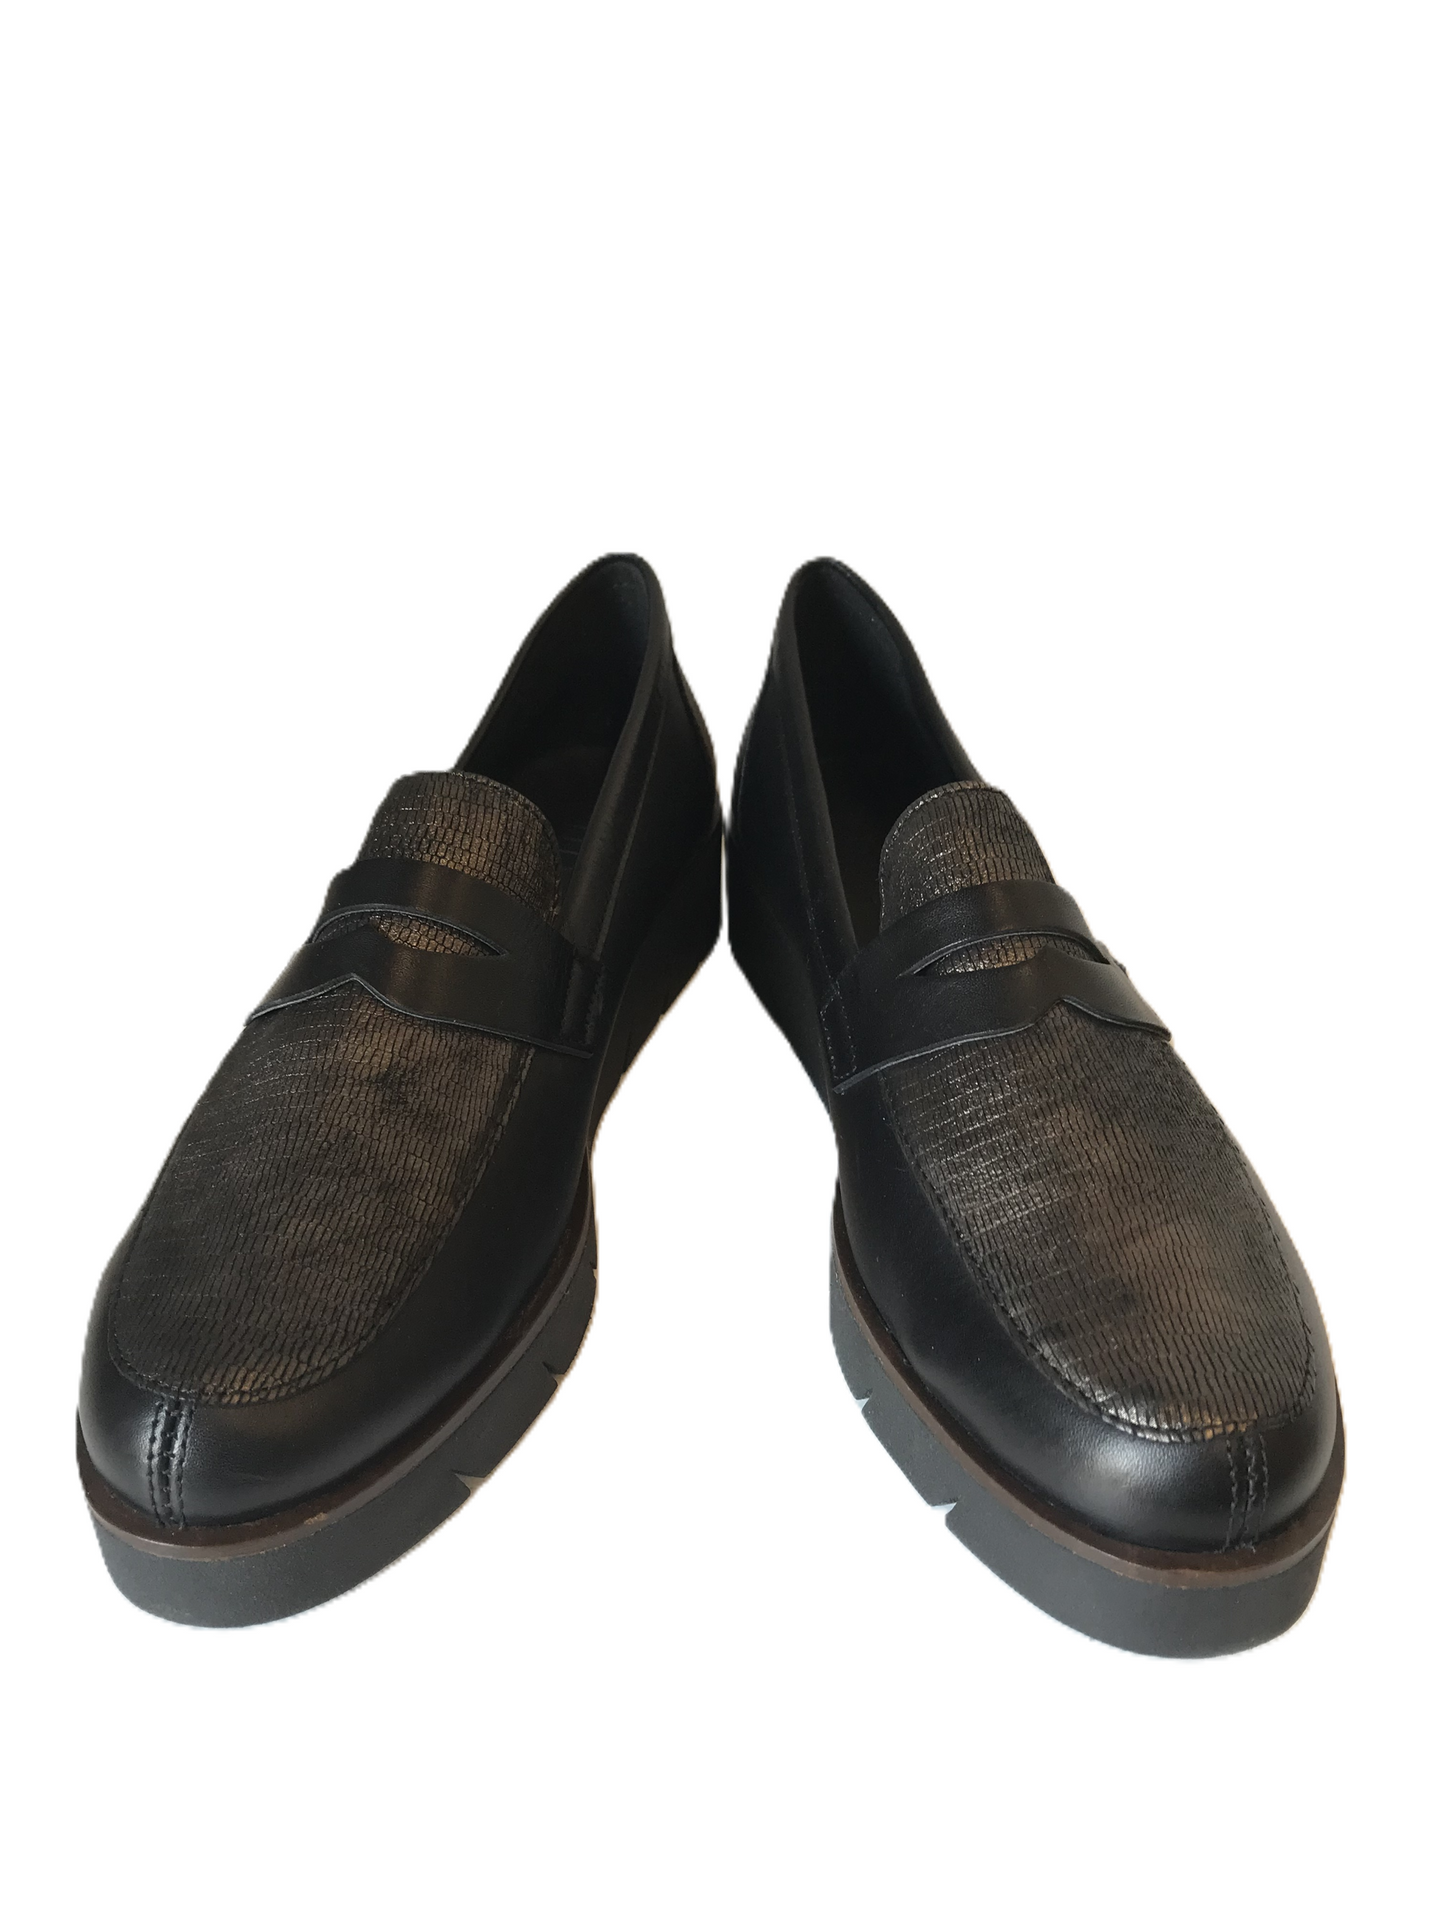 Black Shoes Flats By The Flexx Size: 8.5